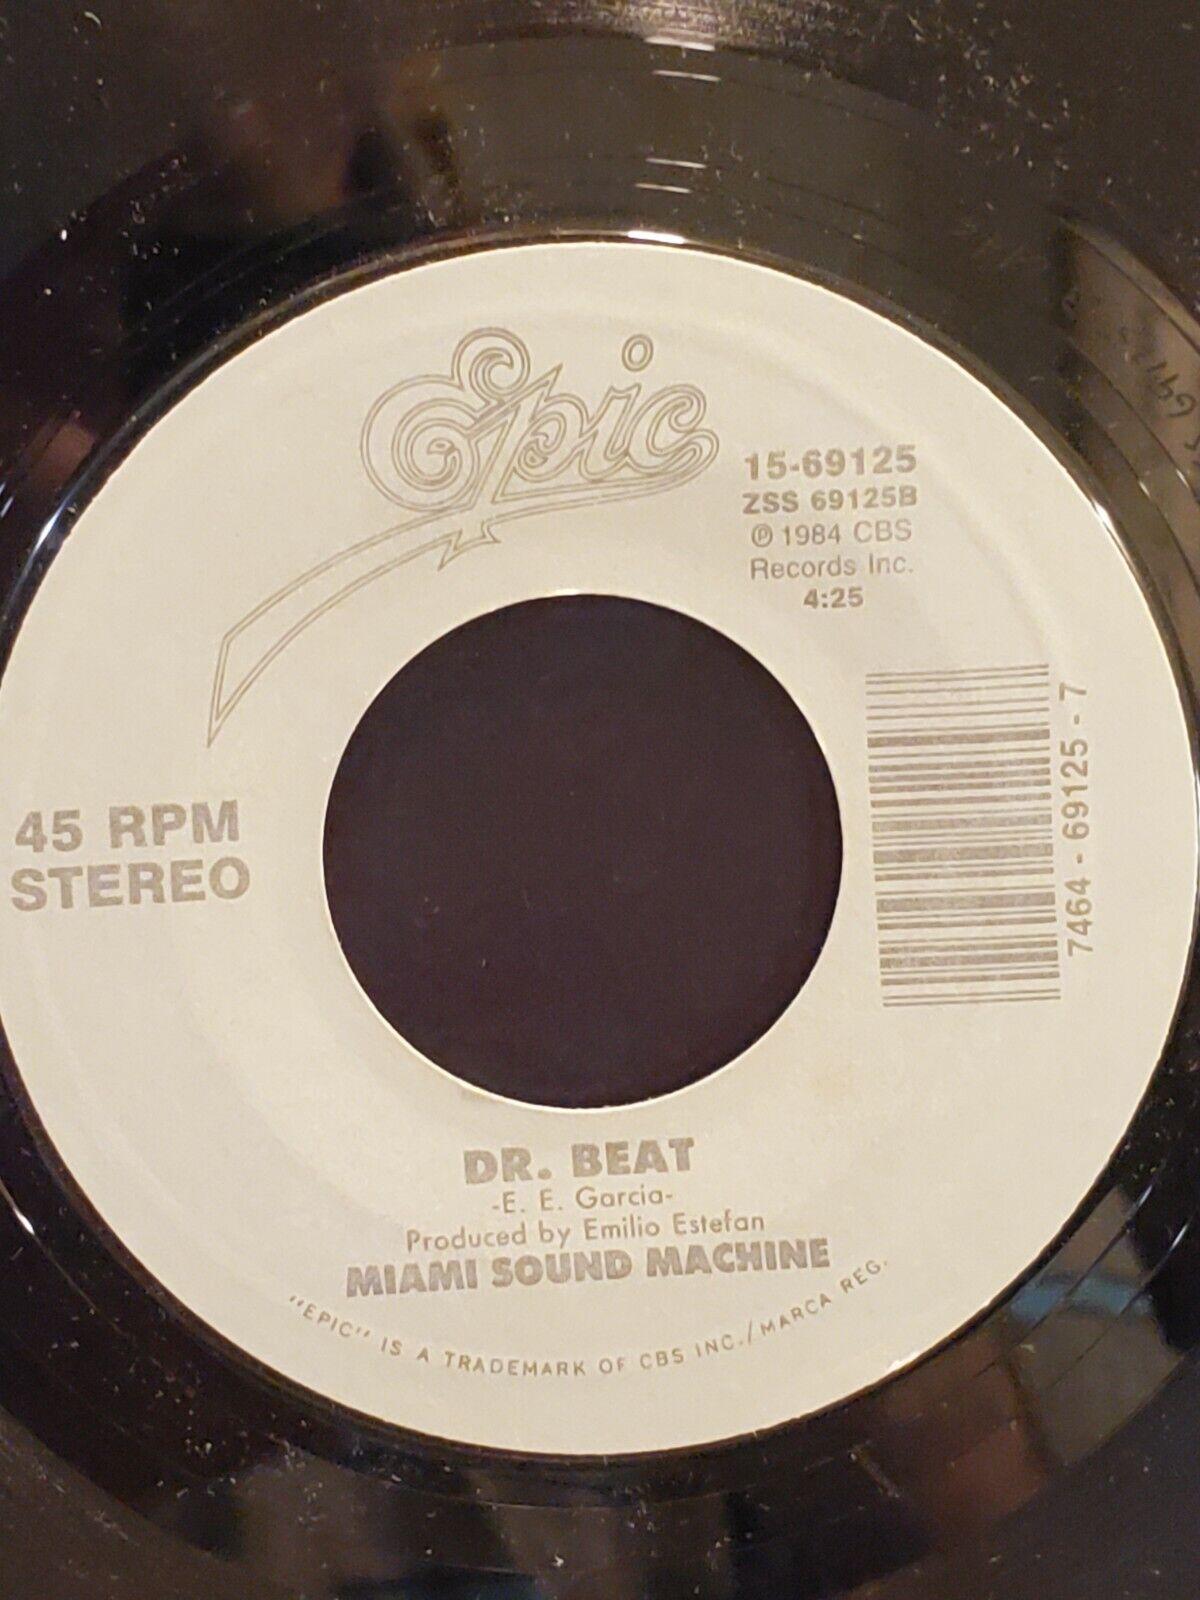 GLORIA ESTEFAN & MIAMI SOUND MACHINE 7" 45 RPM "Rhythm is Gonna Get You" VG+